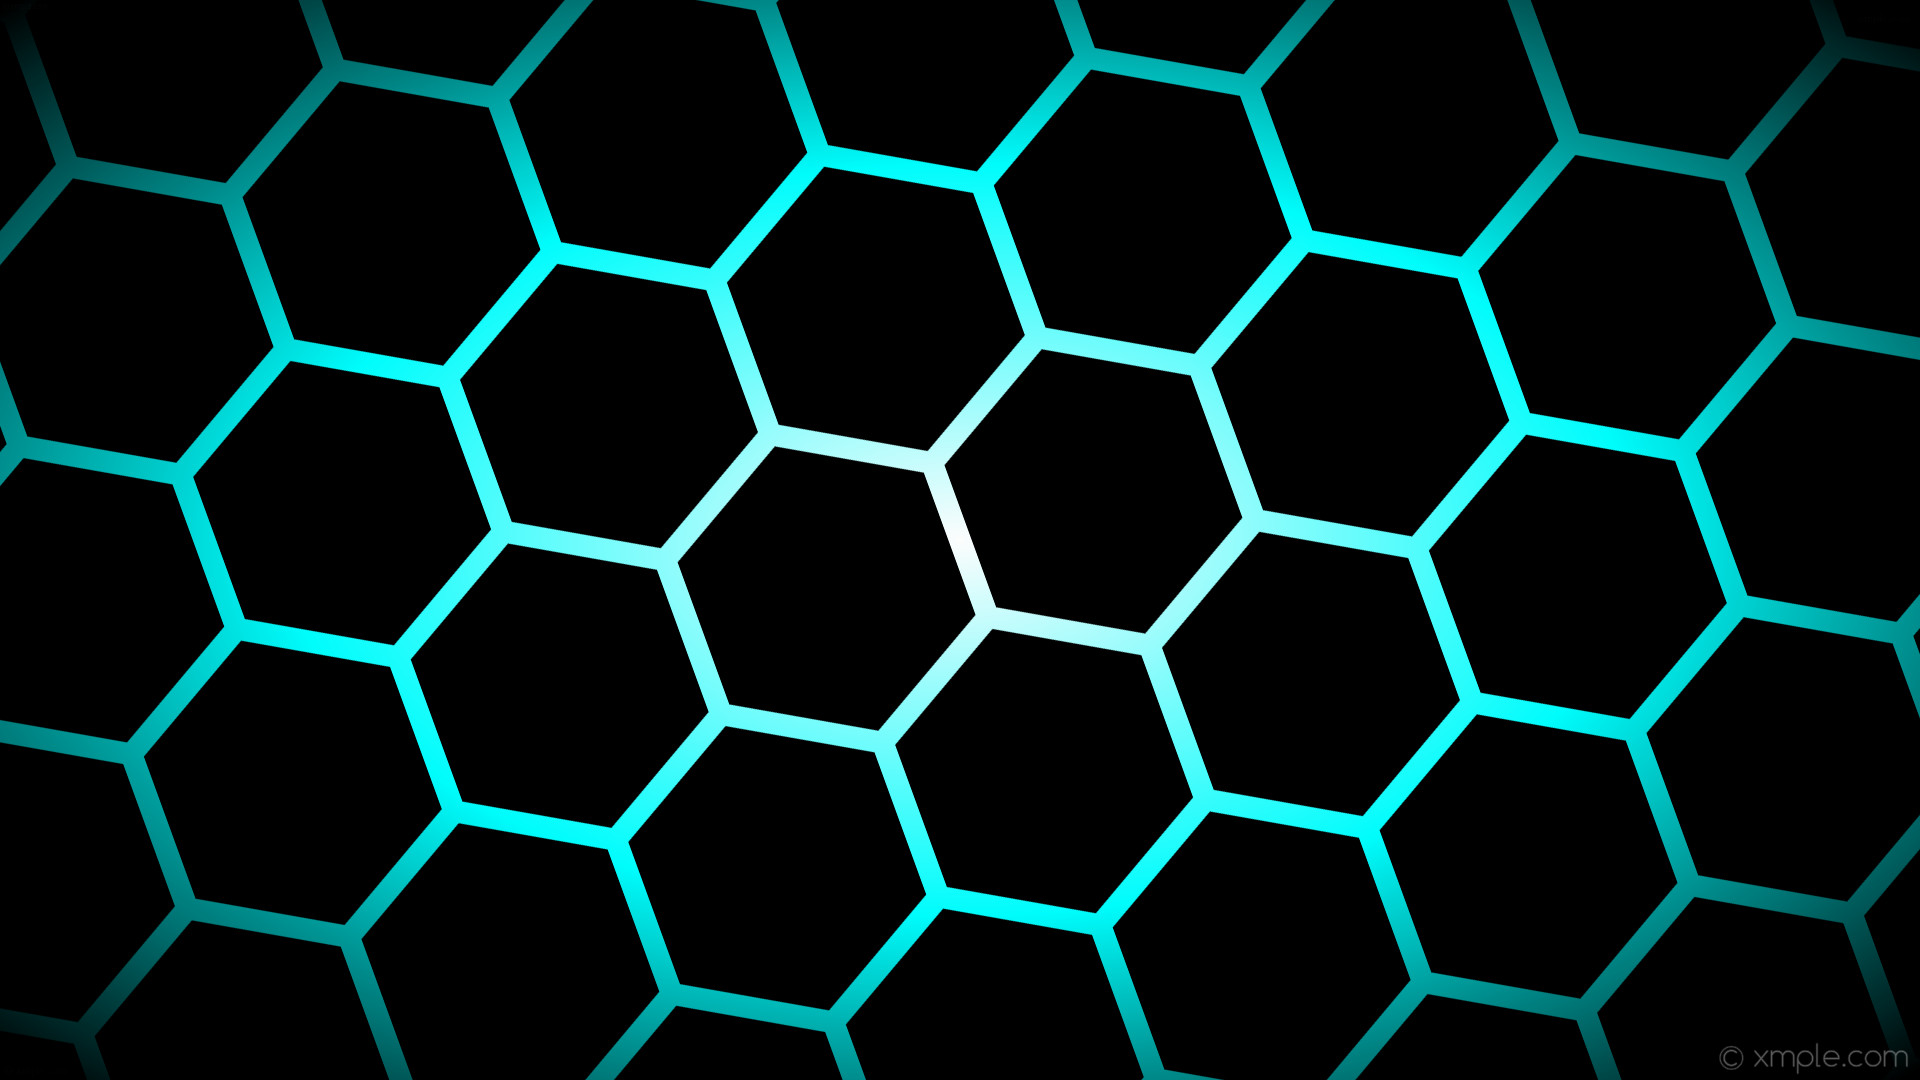 1920x1080 wallpaper glow hexagon black blue white gradient aqua cyan #000000 #ffffff  #00ffff diagonal